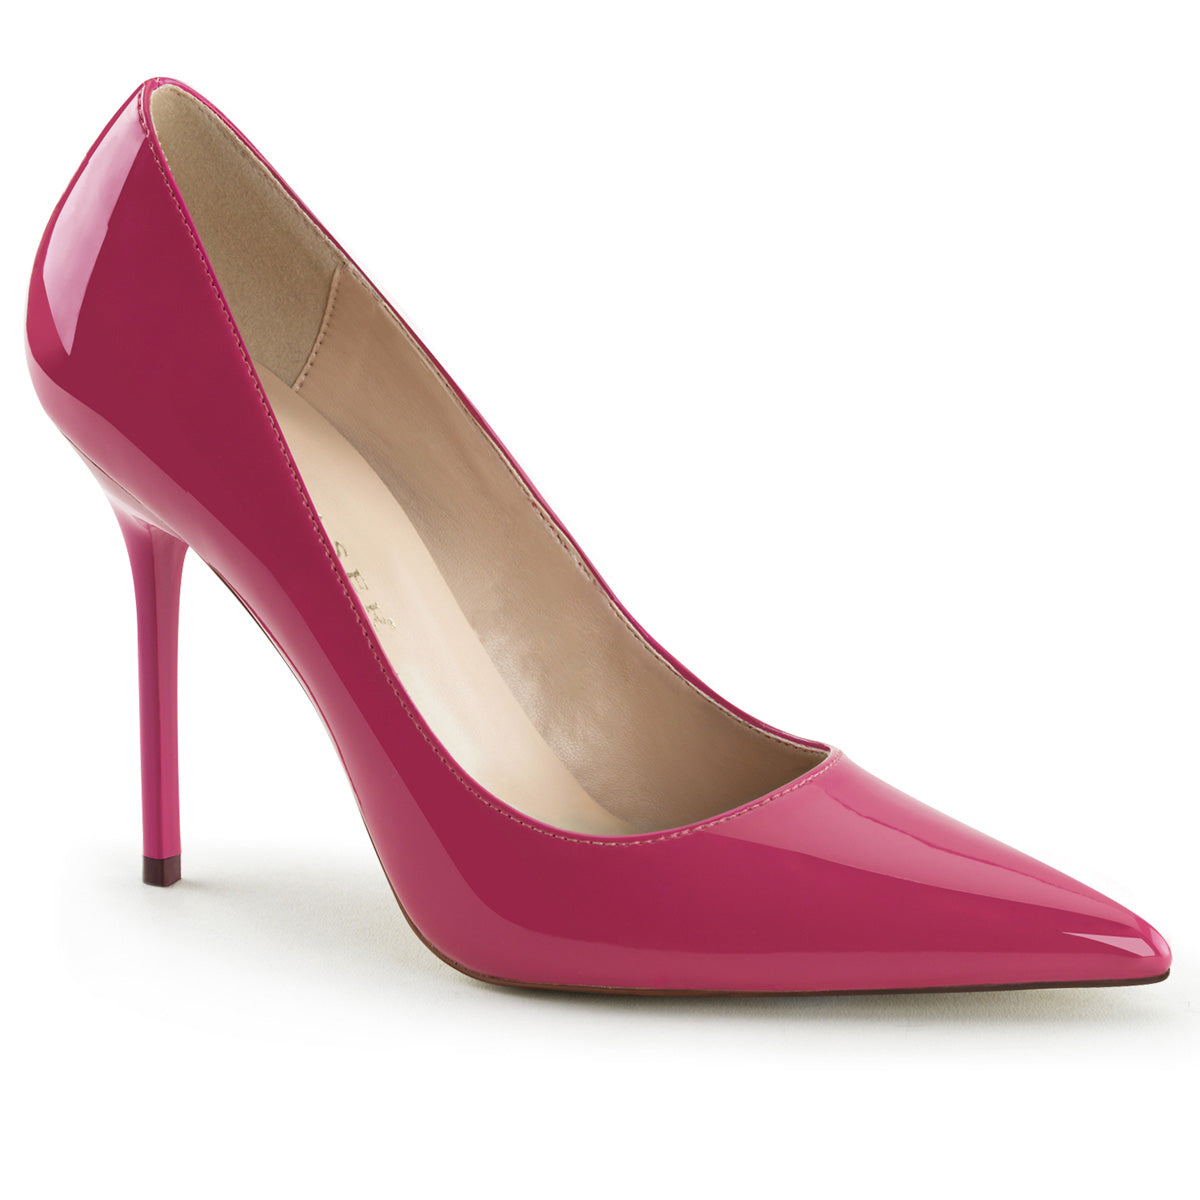 CLASSIQUE-20 Pleaser 4" Heel Hot Pink Patent Fetish Footwear-Pleaser- Sexy Shoes